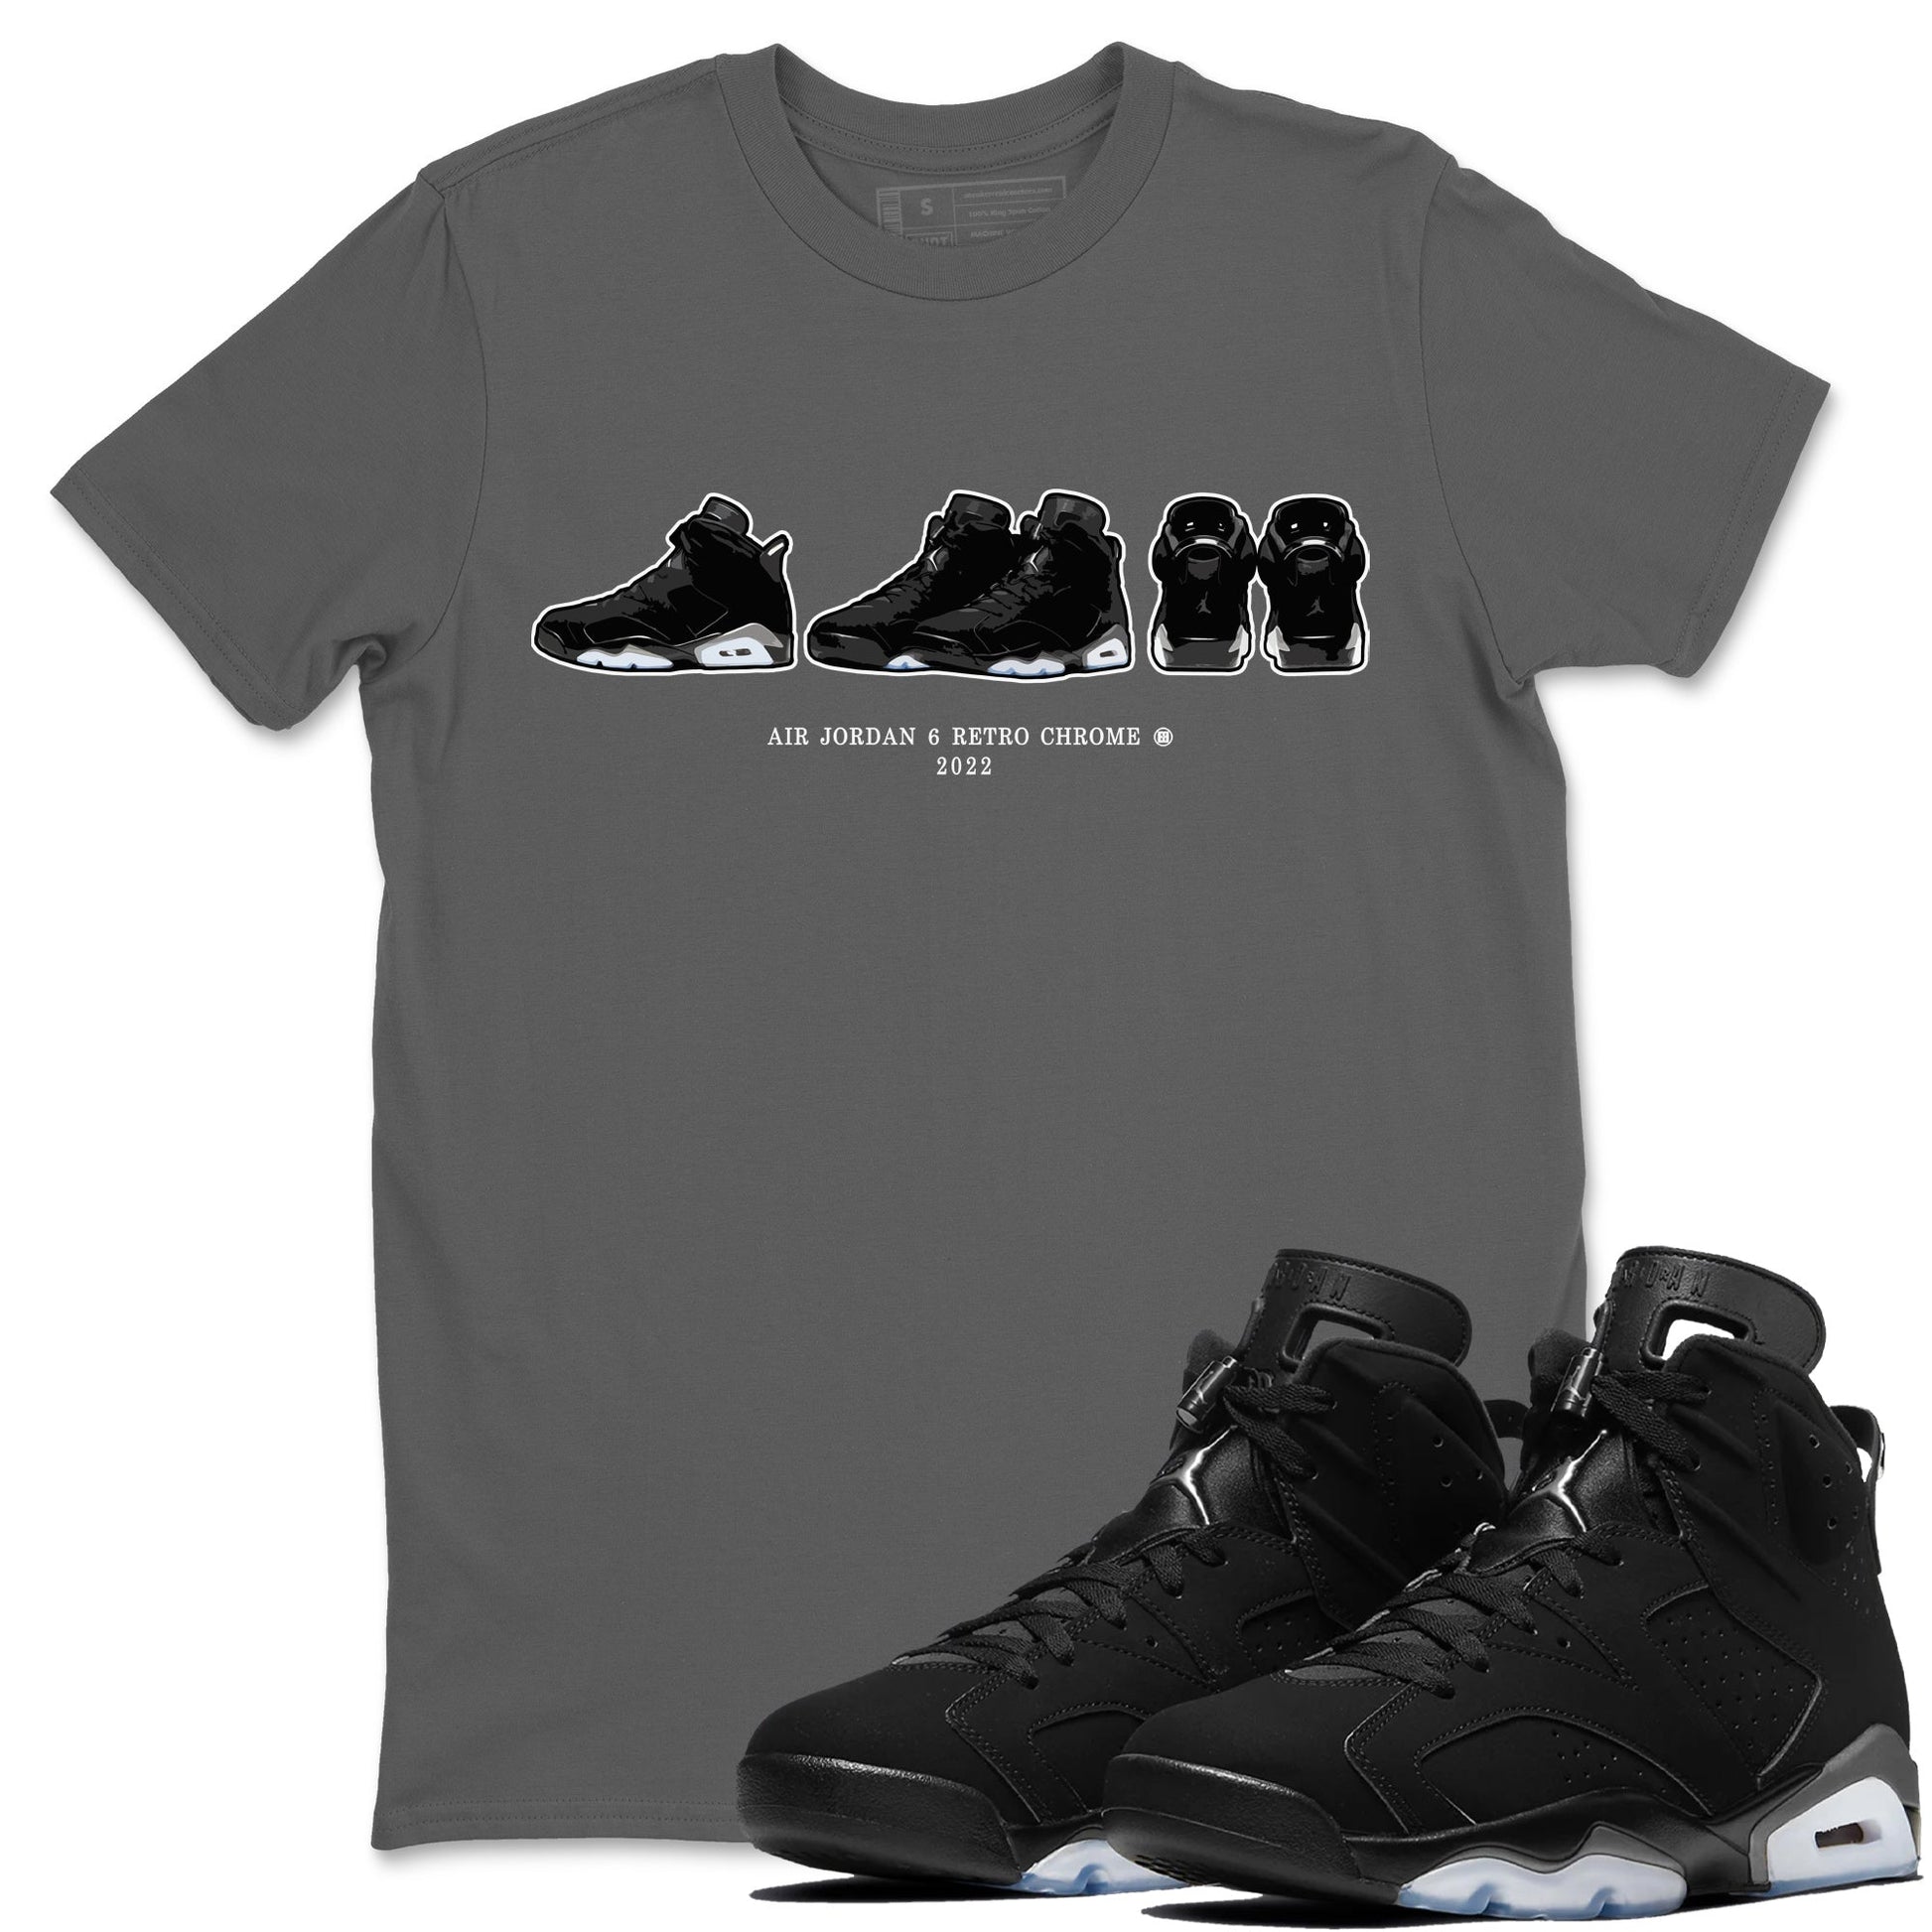 Jordan 6 Chrome Sneaker Match Tees Air Jordan 6 Prelude Sneaker Tees Jordan 6 Chrome Sneaker Release Tees Unisex Shirts